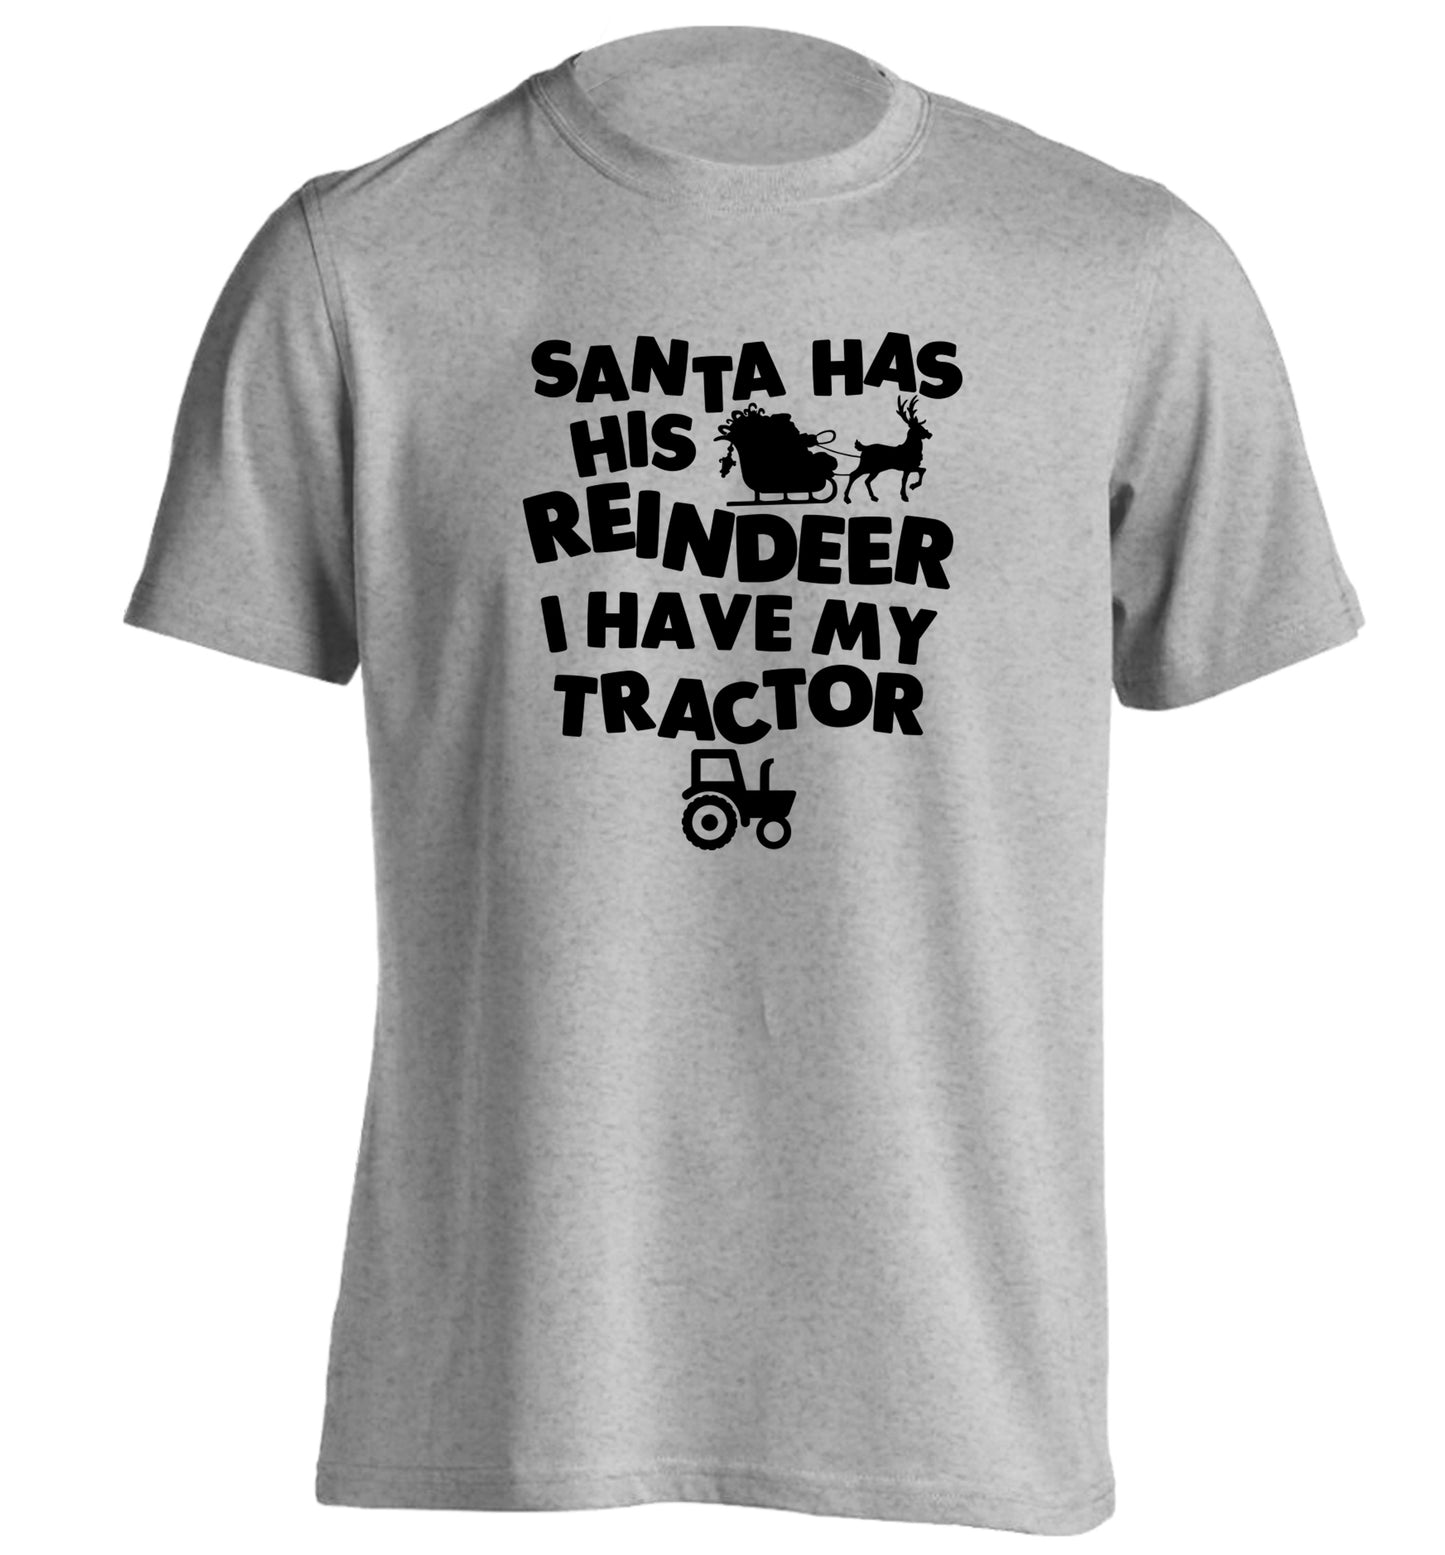 Santa has his reindeer I have my tractor adults unisex grey Tshirt 2XL